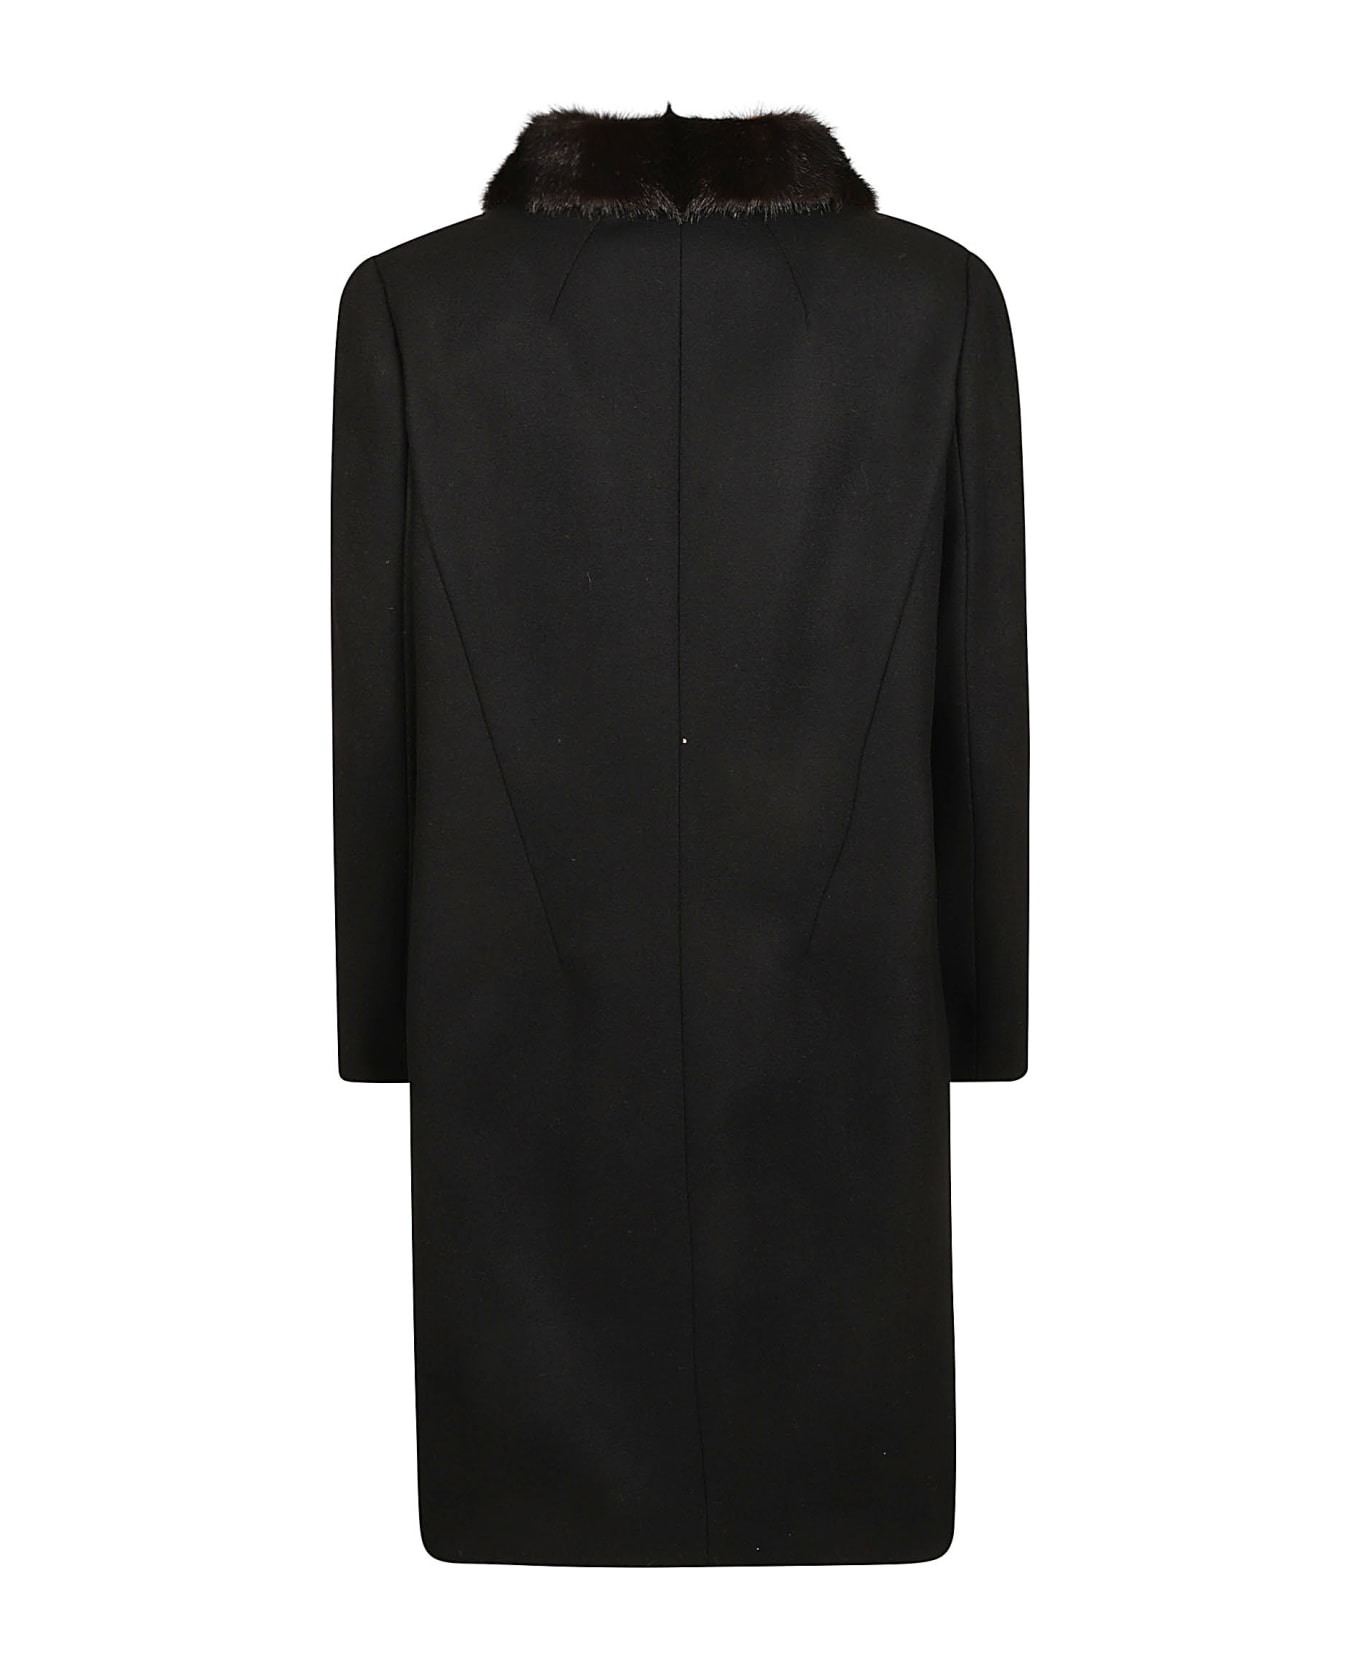 N.21 Fur Detailed Long Coat - Black